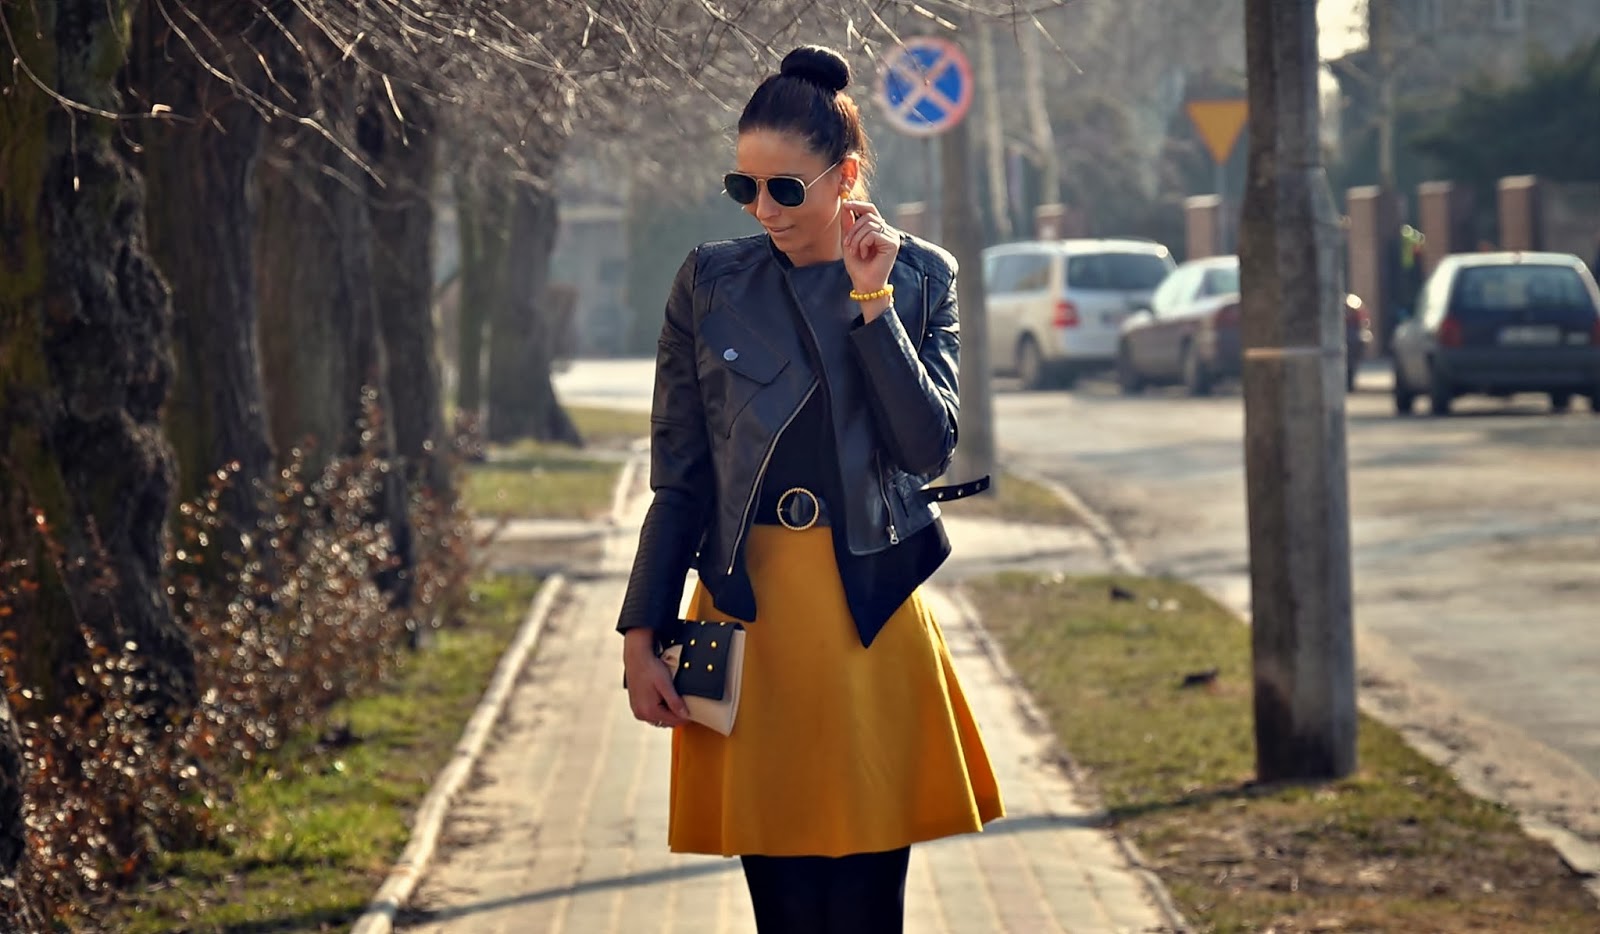 Diy skirt&leather jacket